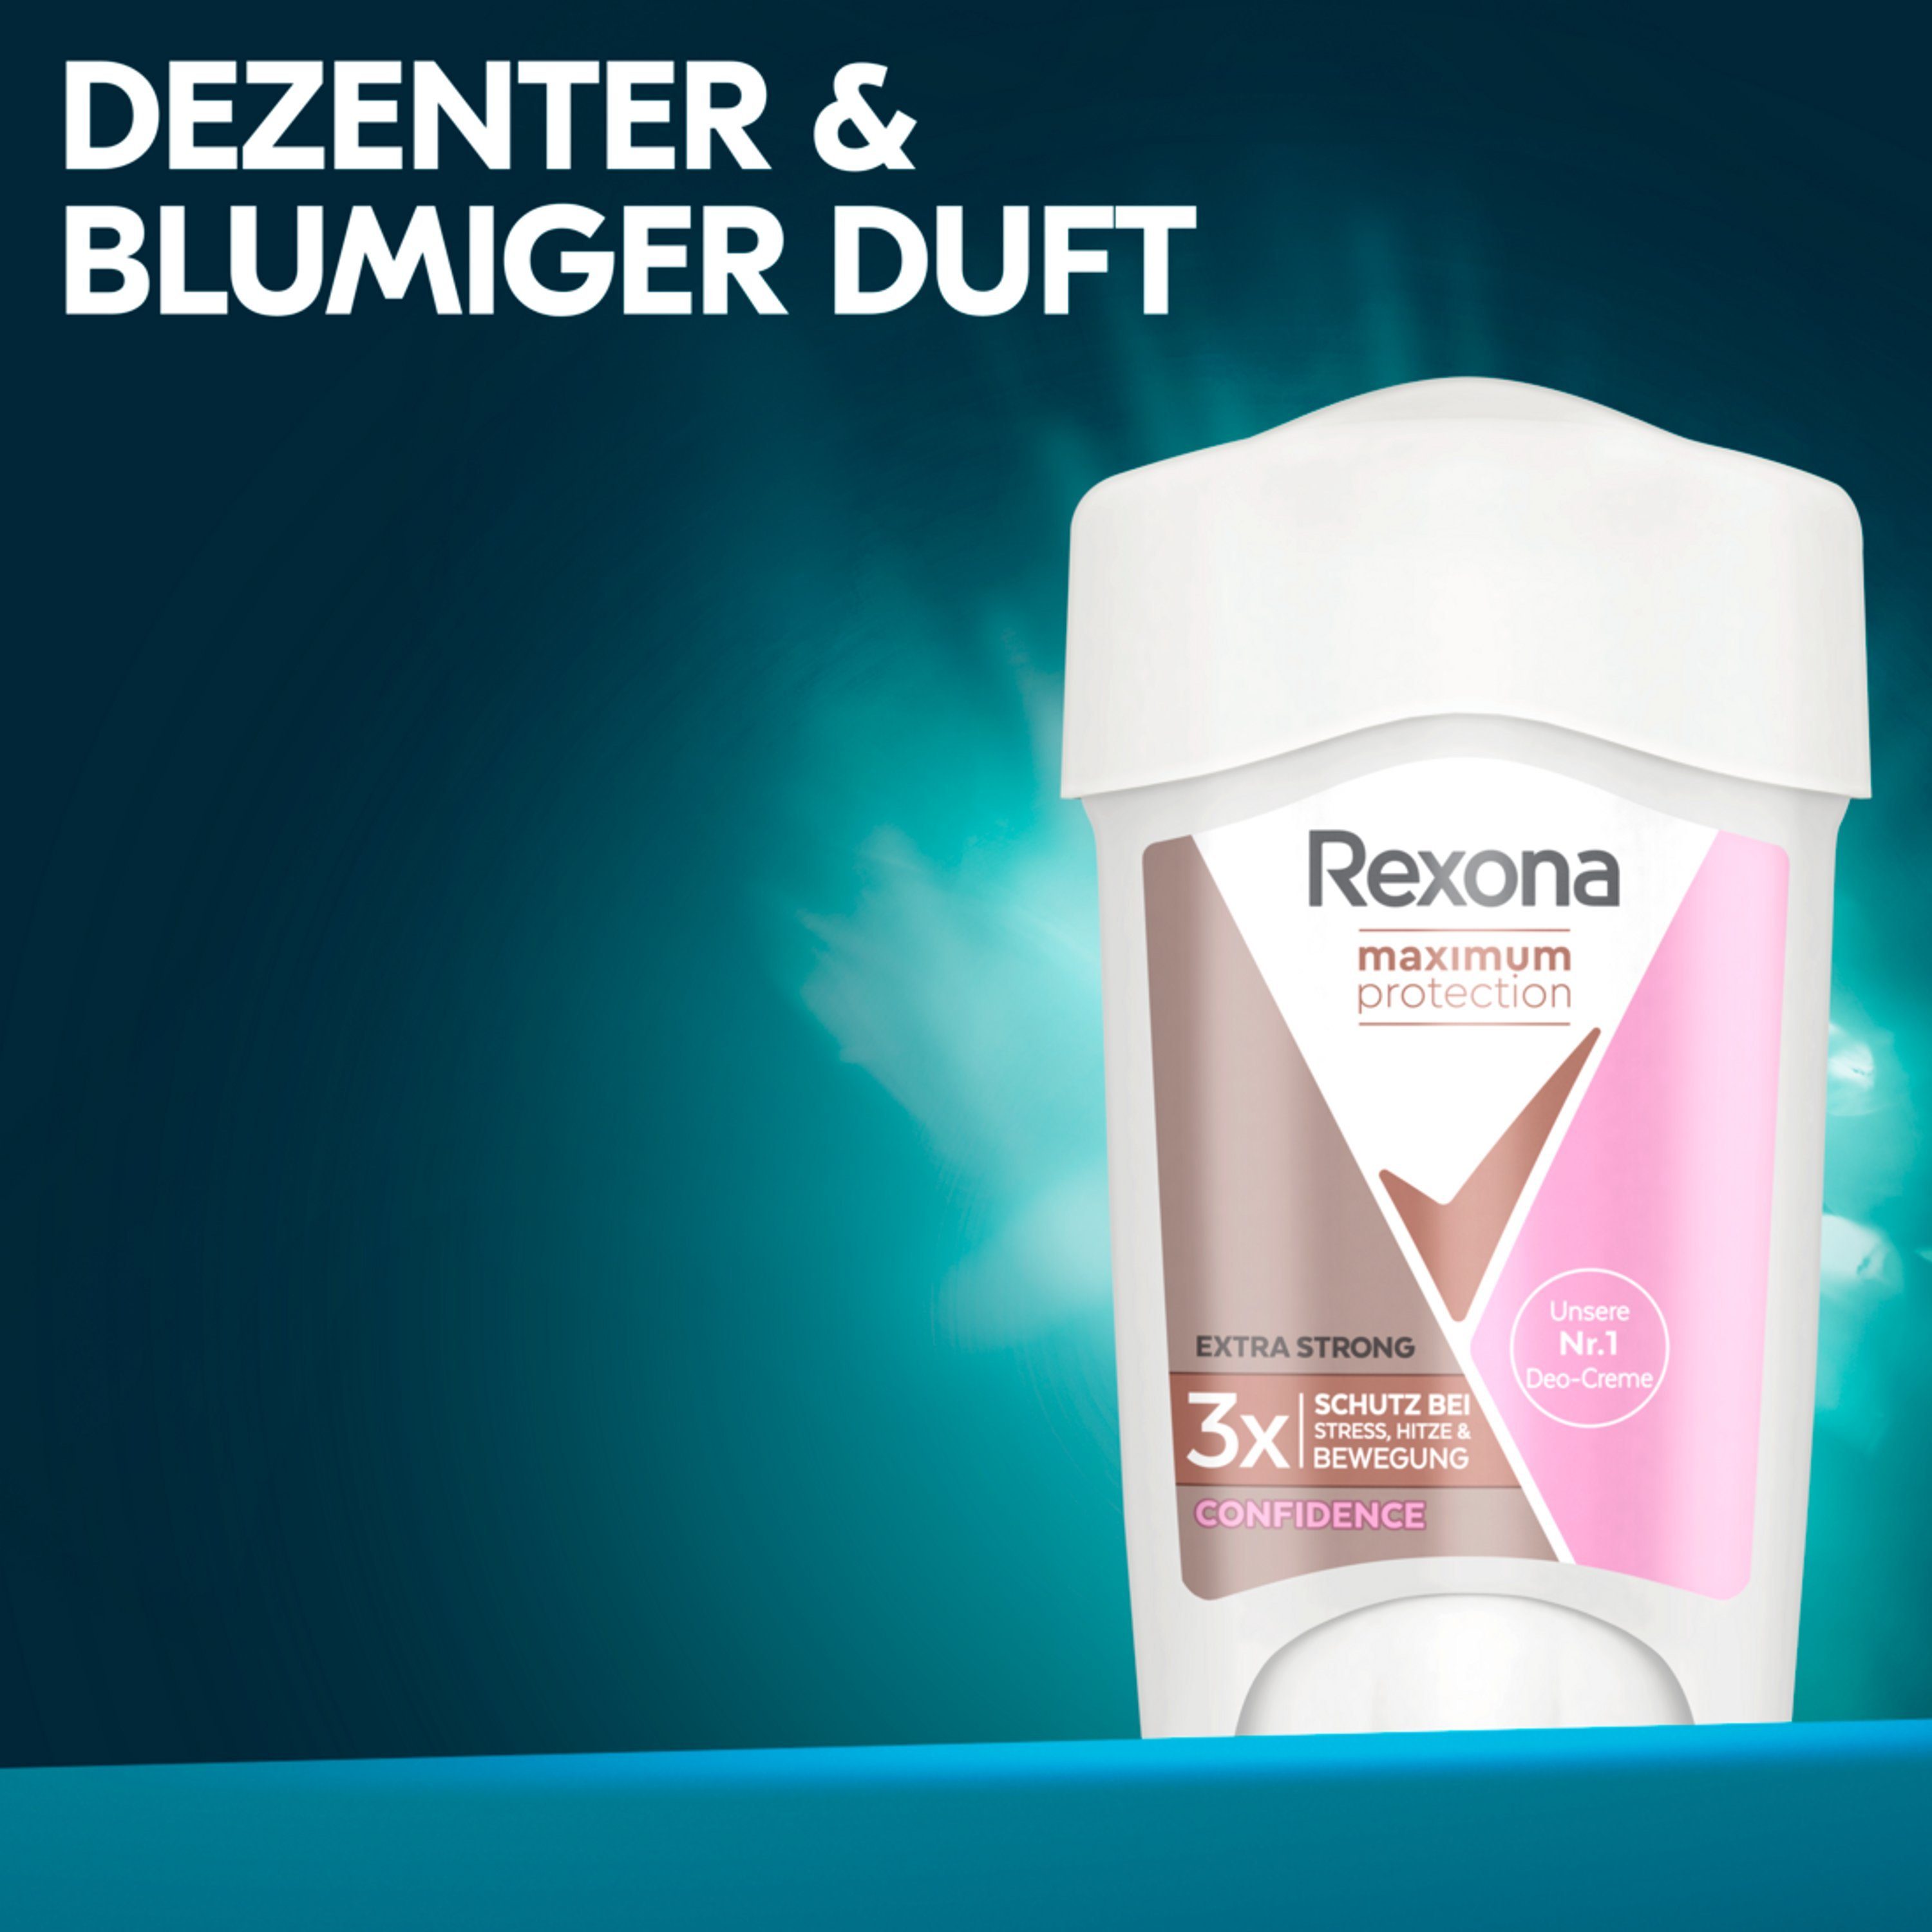 Rexona Deo-Set Maximum Protection Deo Transpirant Creme Anti 6x45ml Confidence